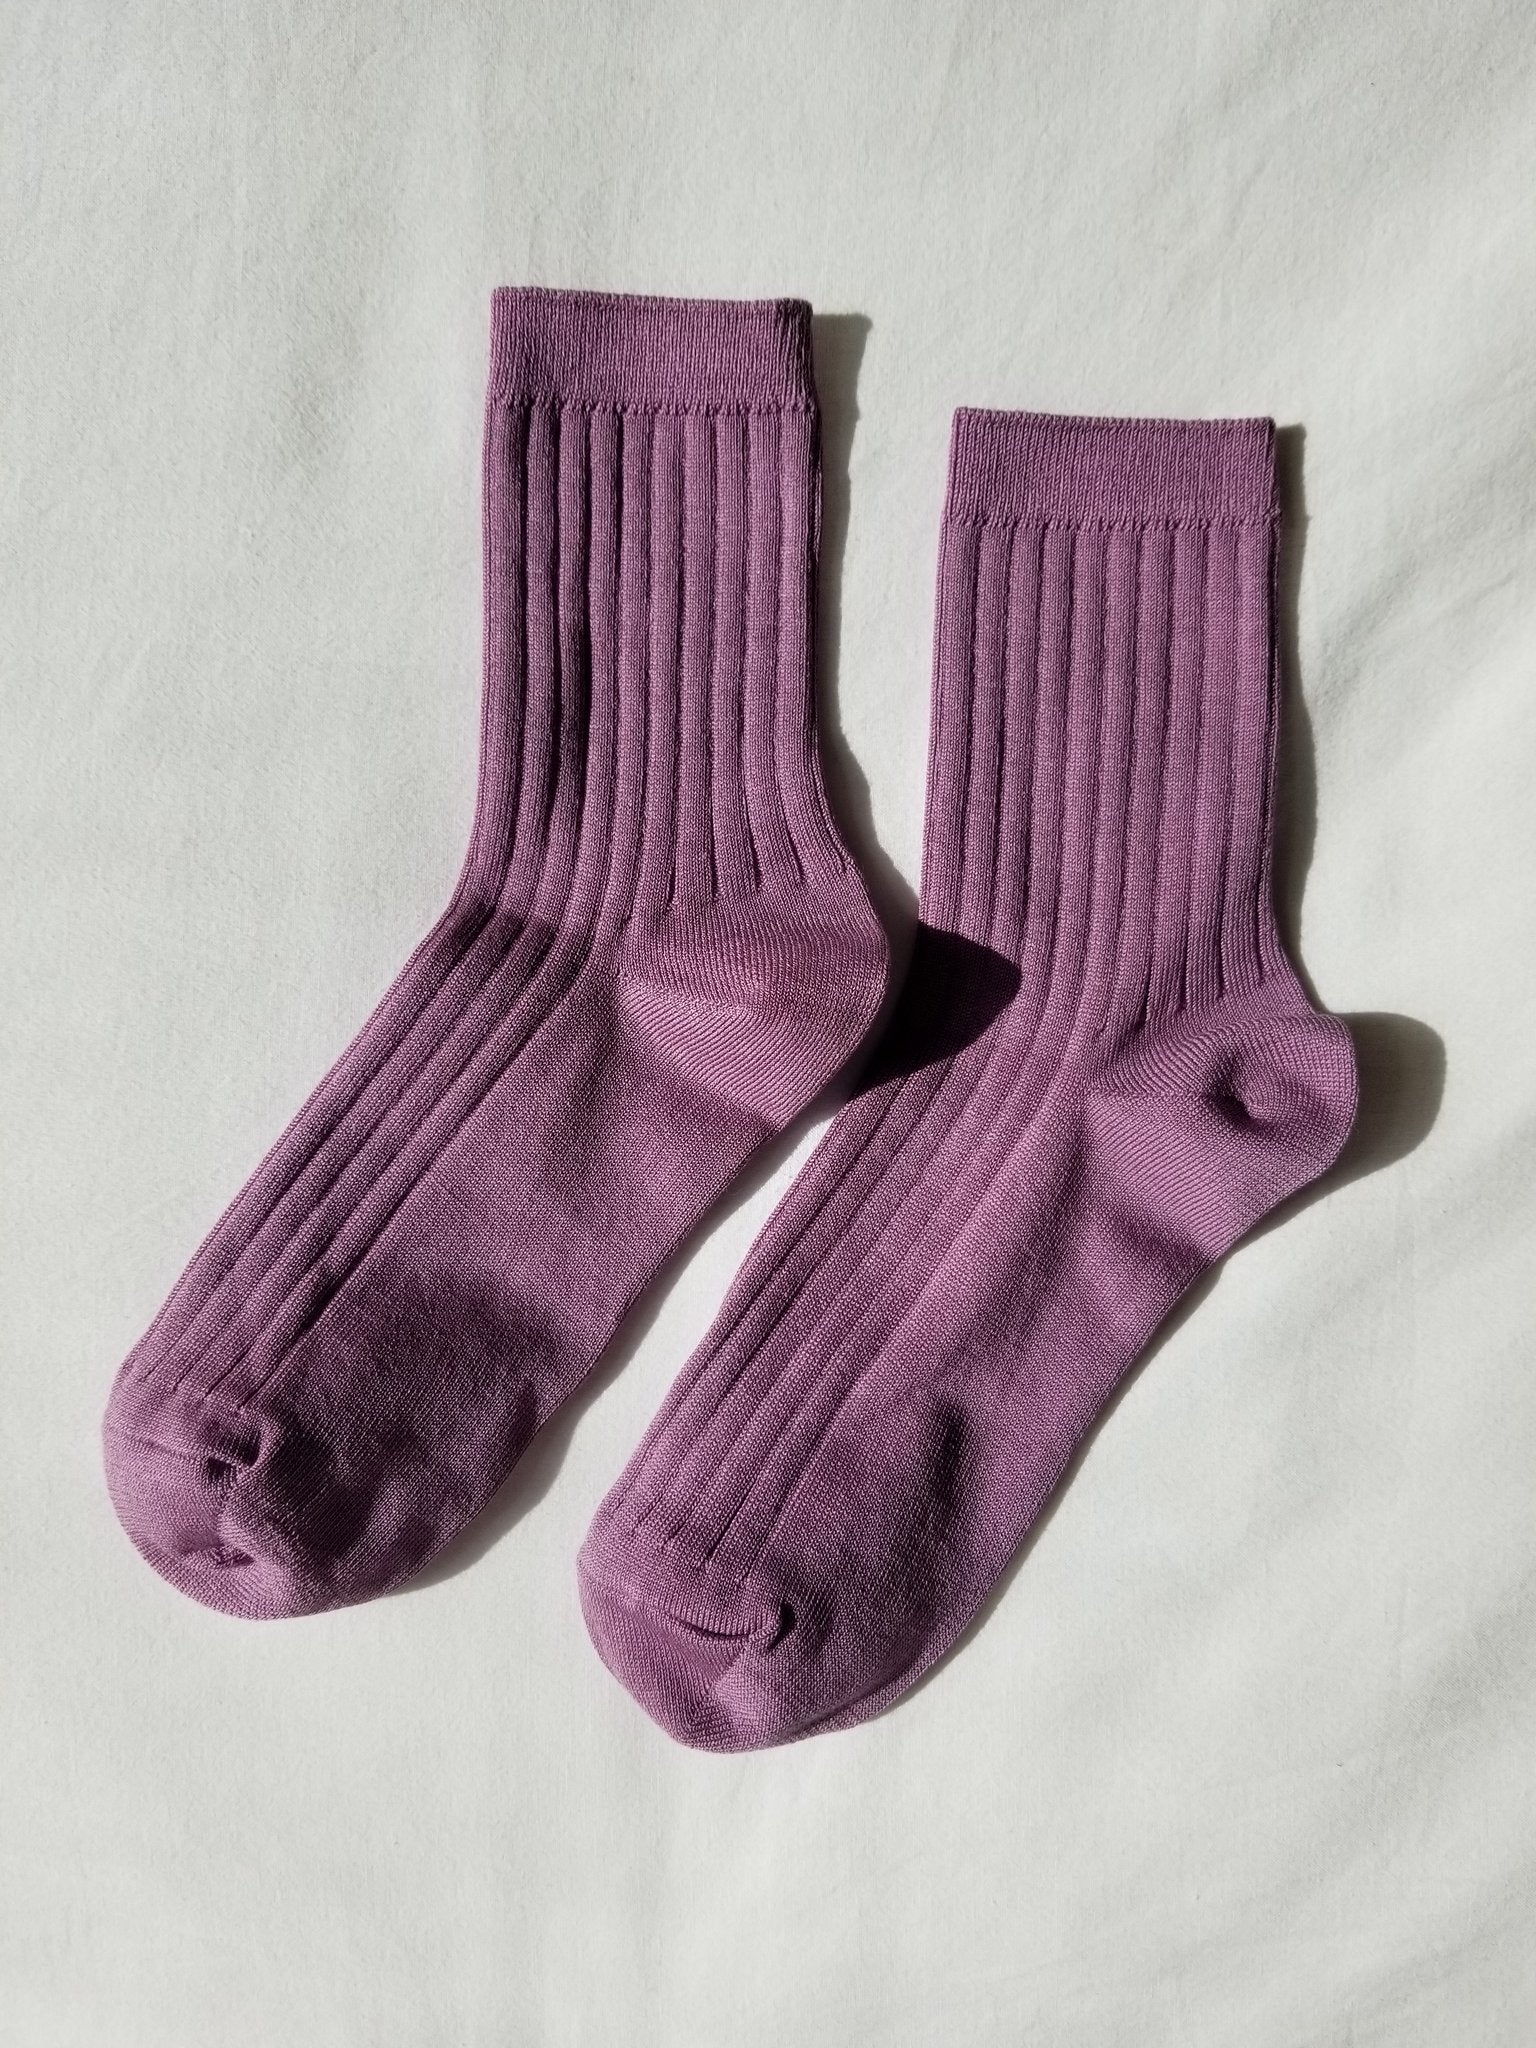 Her socks - William Bee